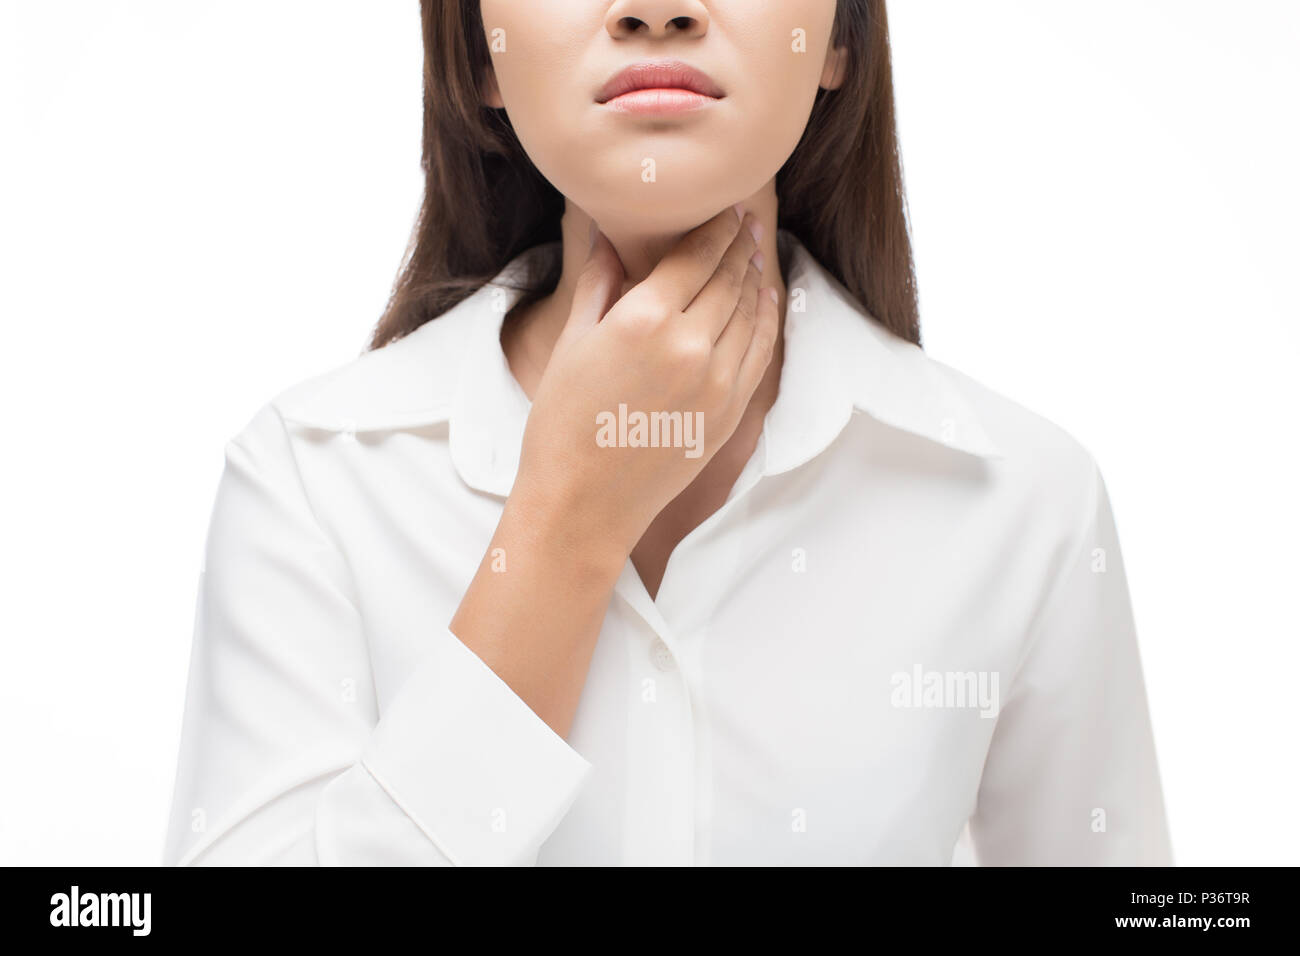 Sore throat woman on white background Stock Photo